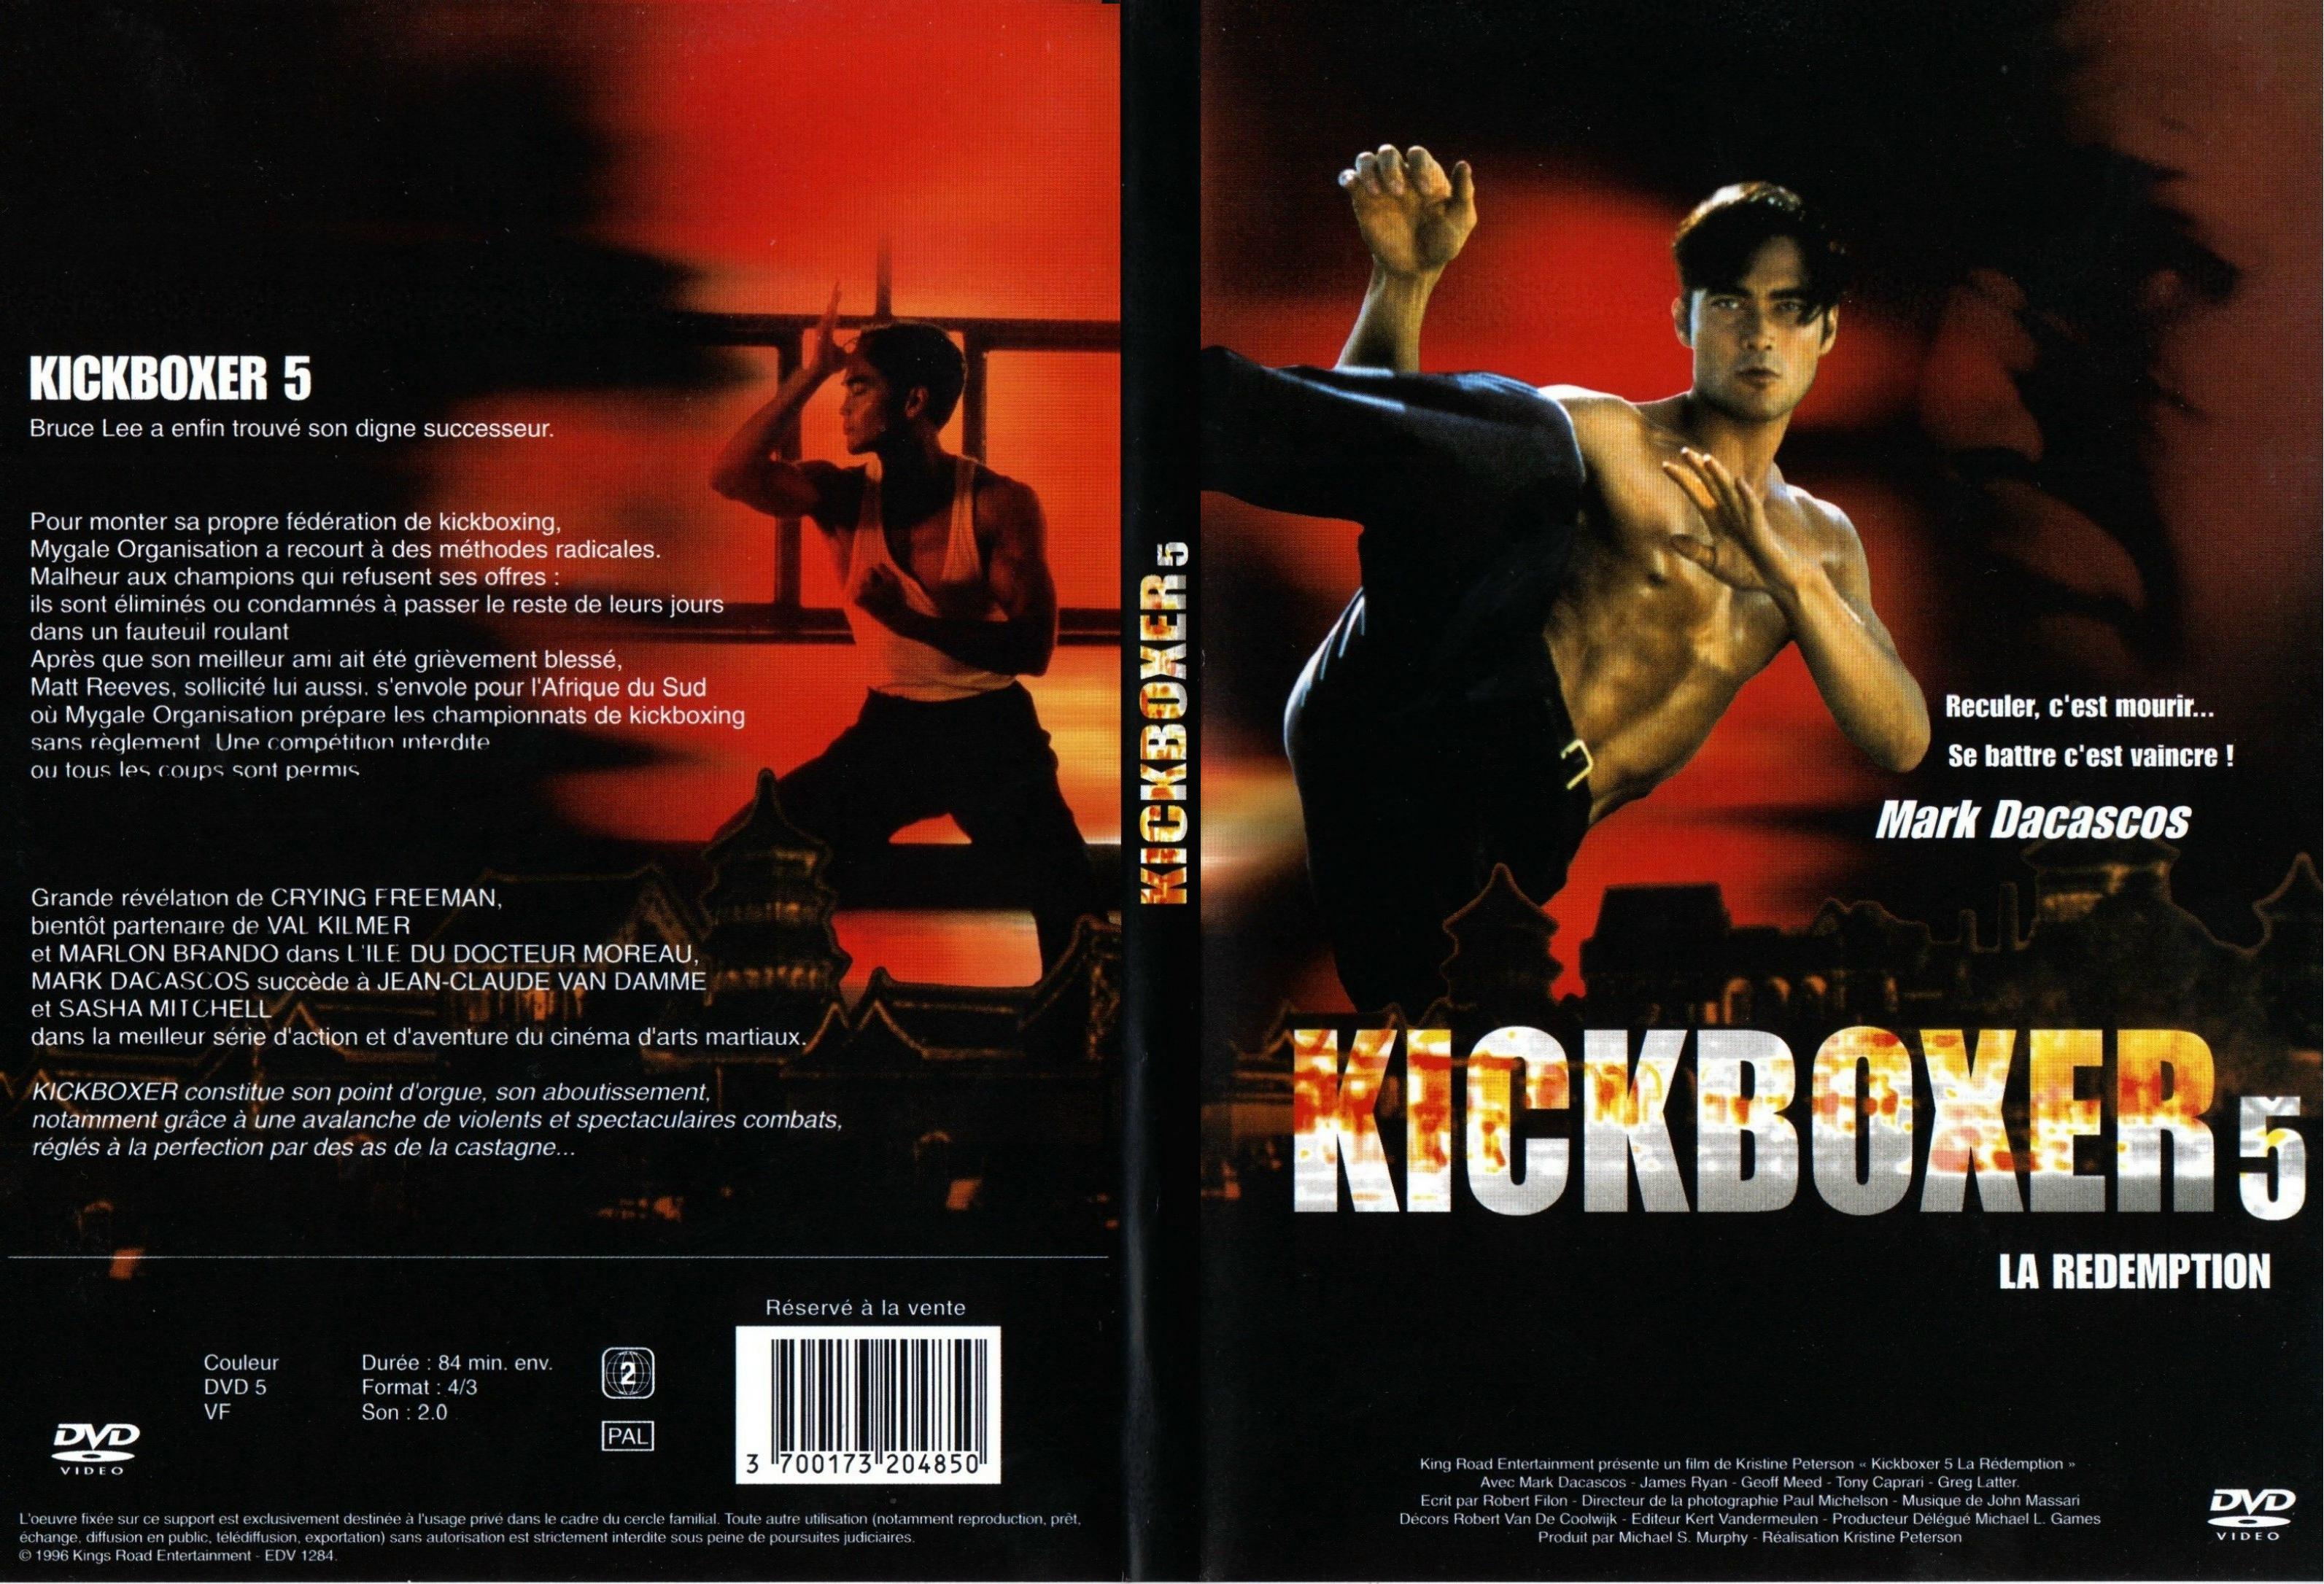 Jaquette DVD Kickboxer 5 - SLIM